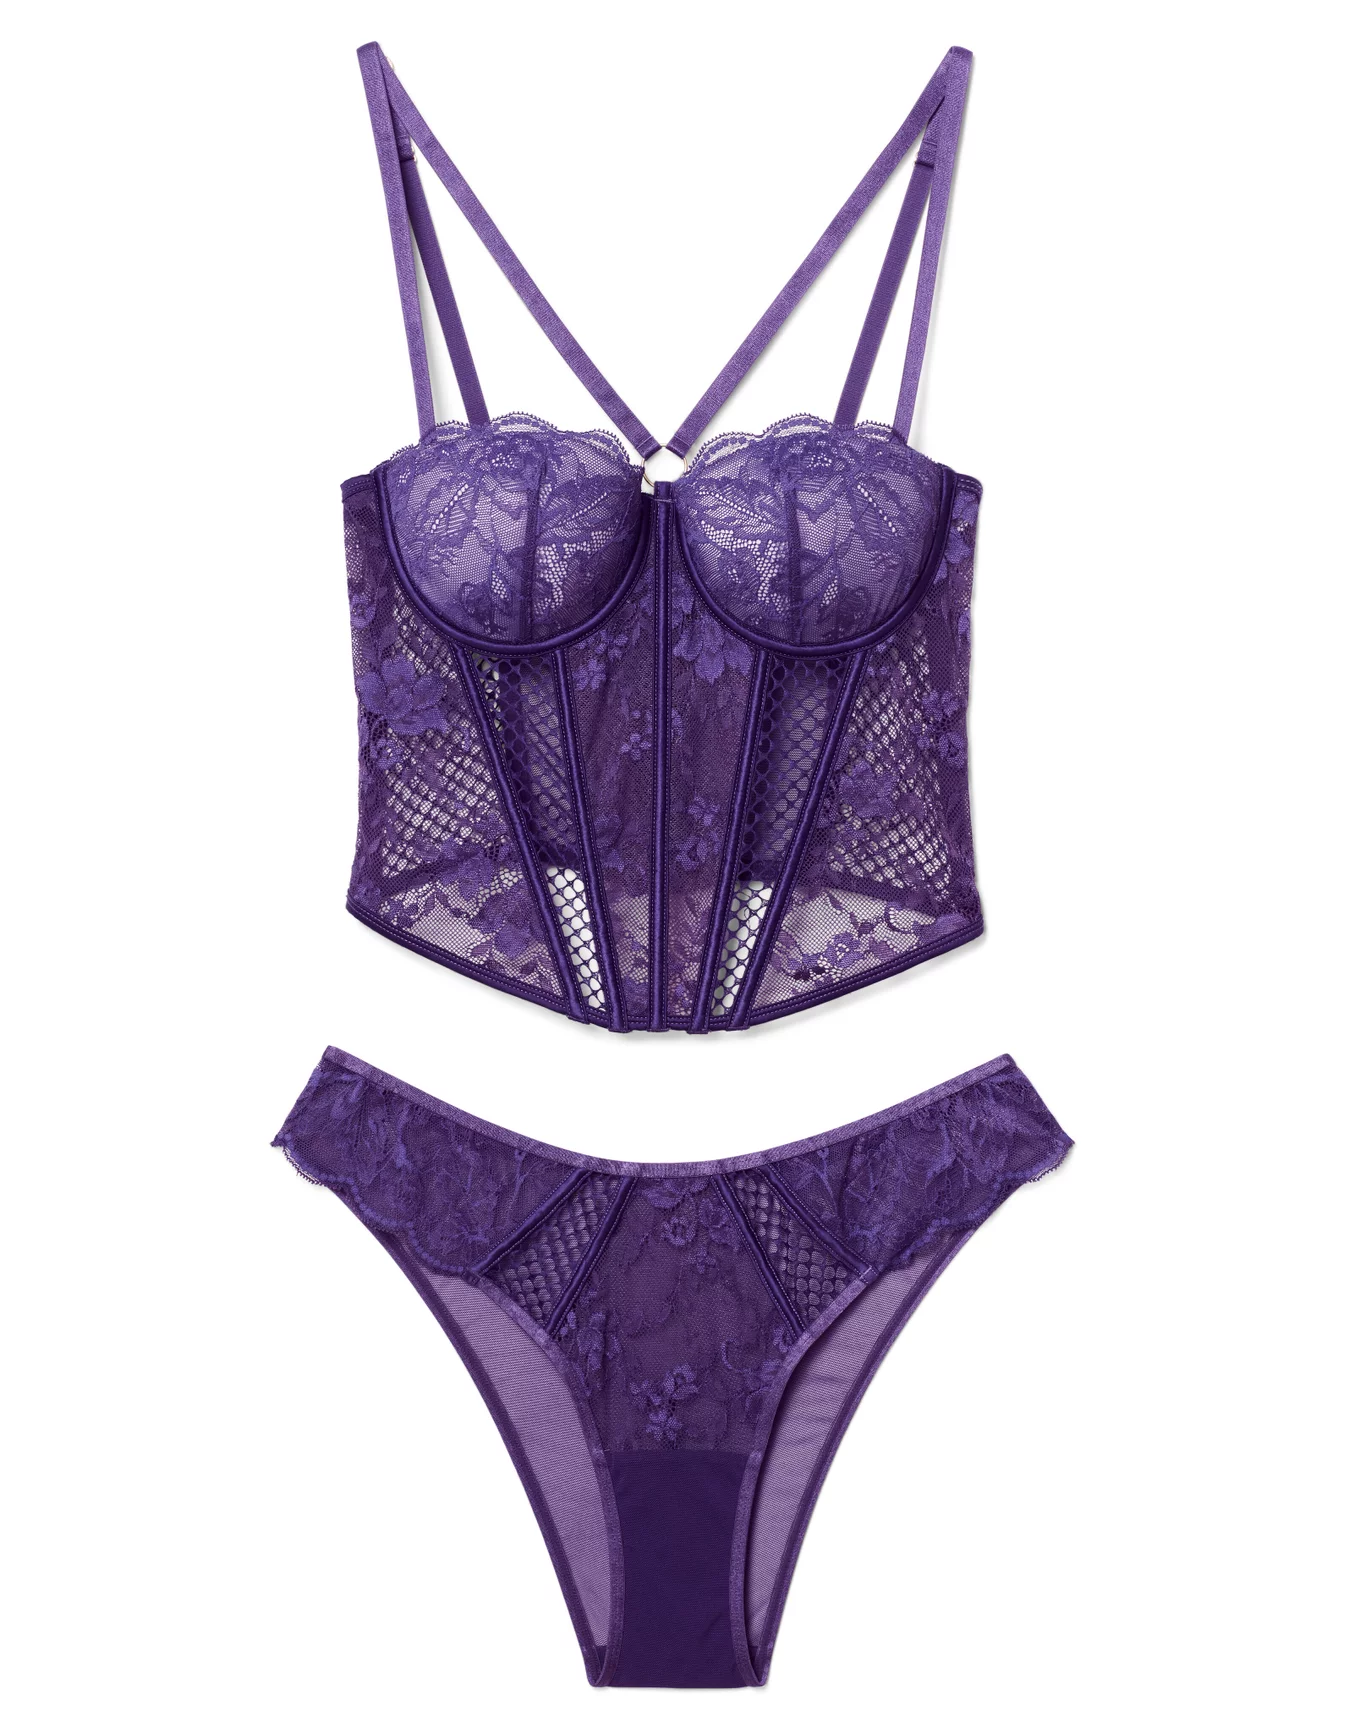 Torrid beautiful purple lace bra size 40F or 40DDD - Depop